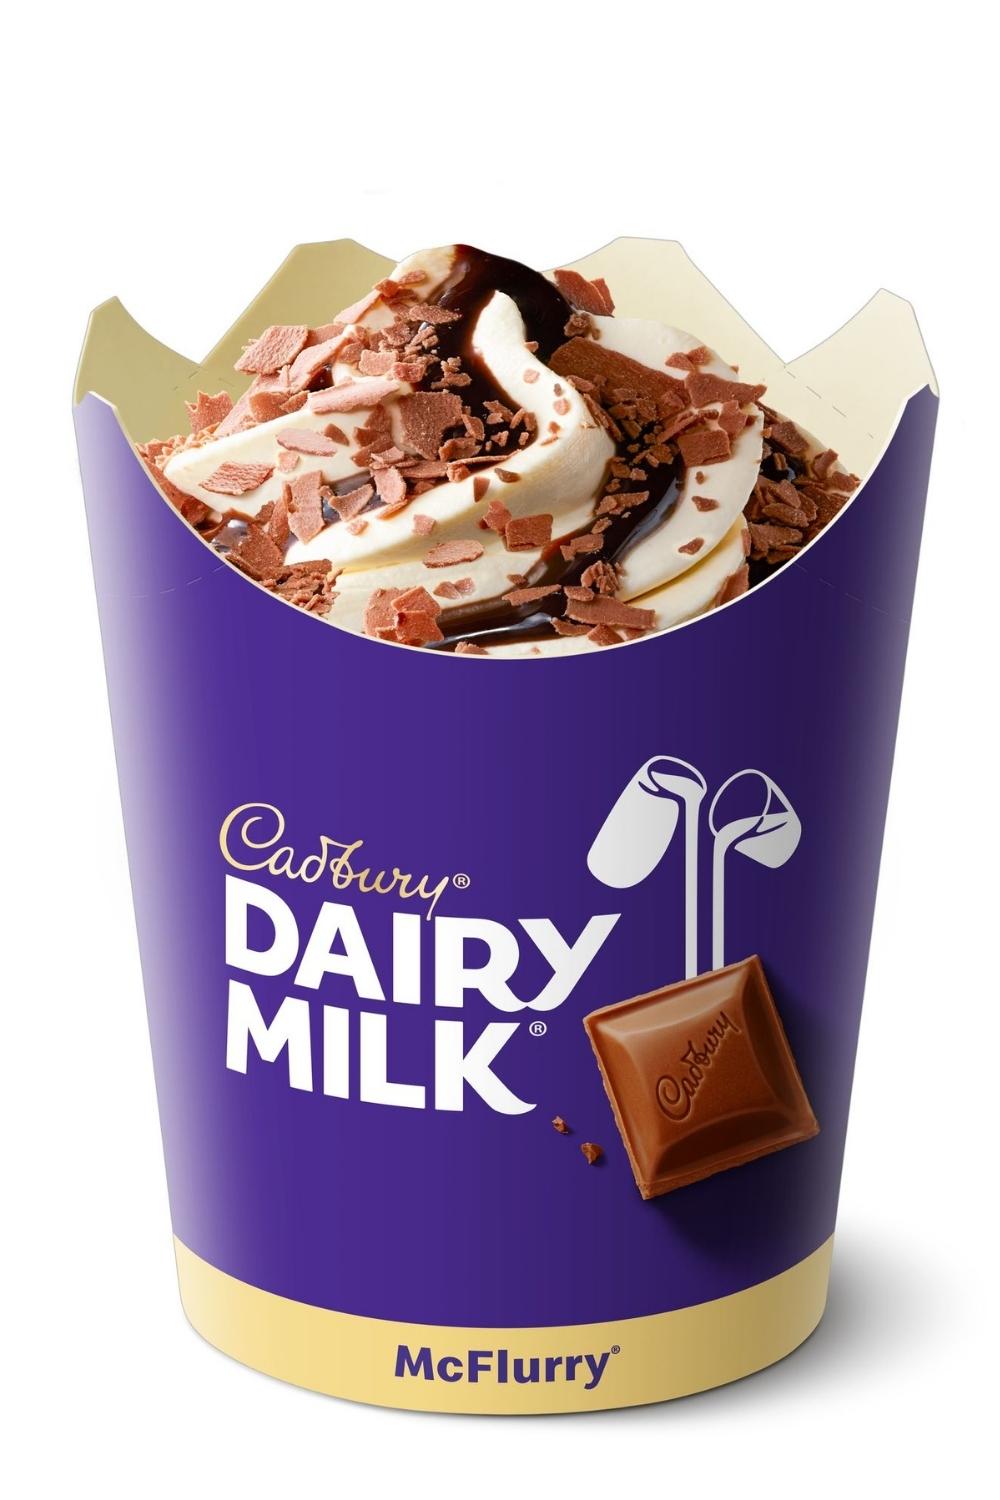 Calories in McDonald's Cadbury® Dairy Milk® McFlurry